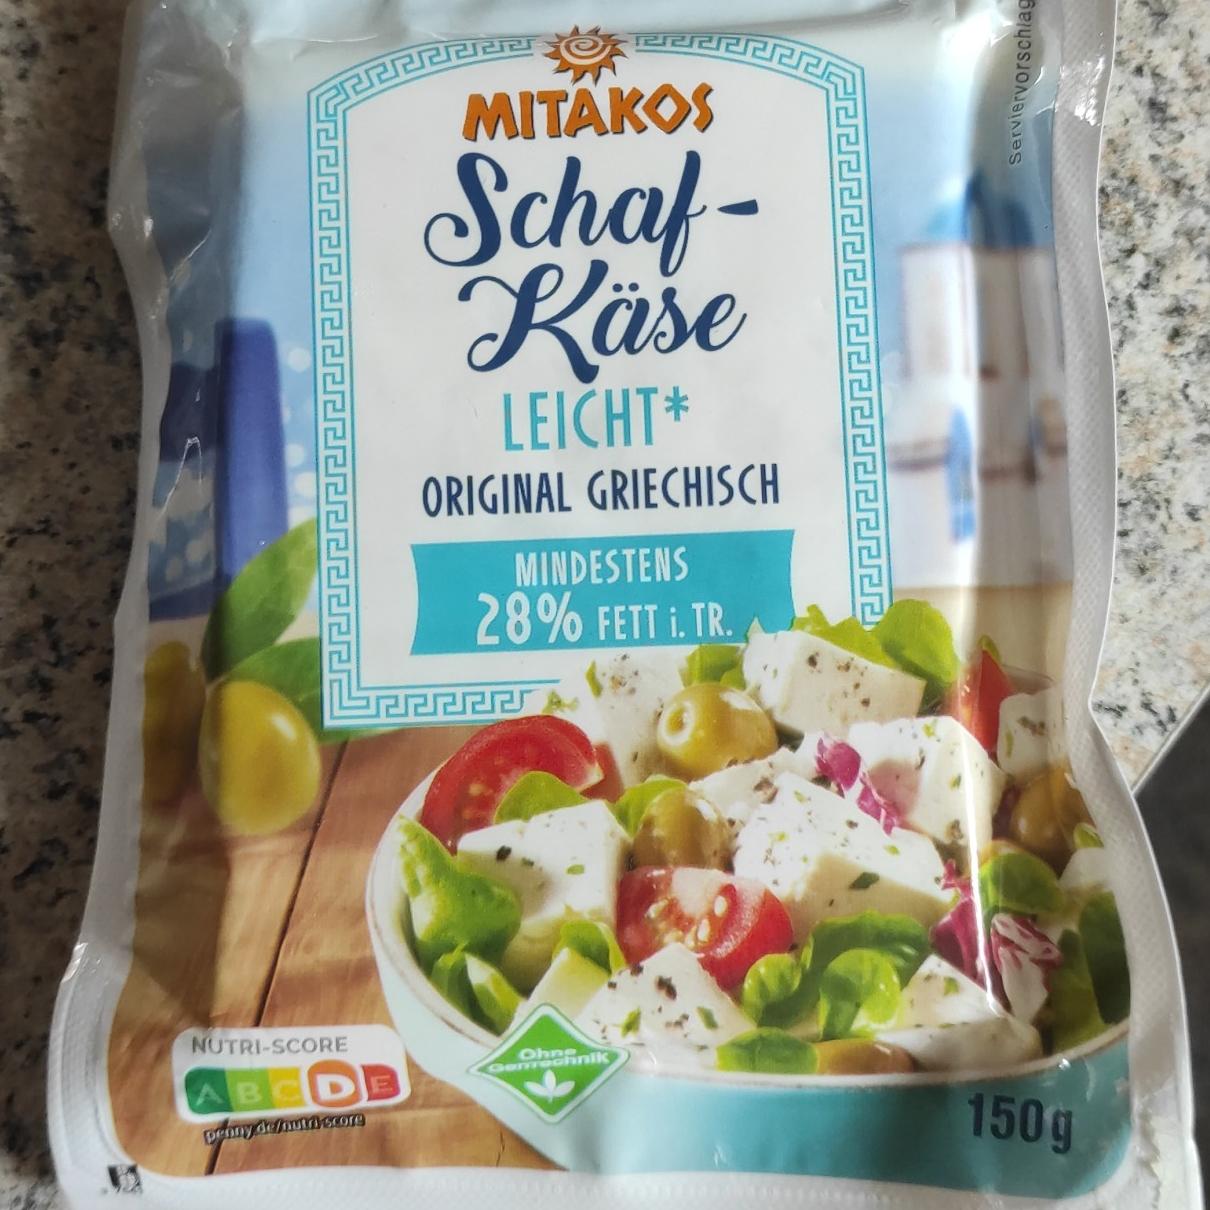 Zdjęcia - Schal-käse leicht Mitakos